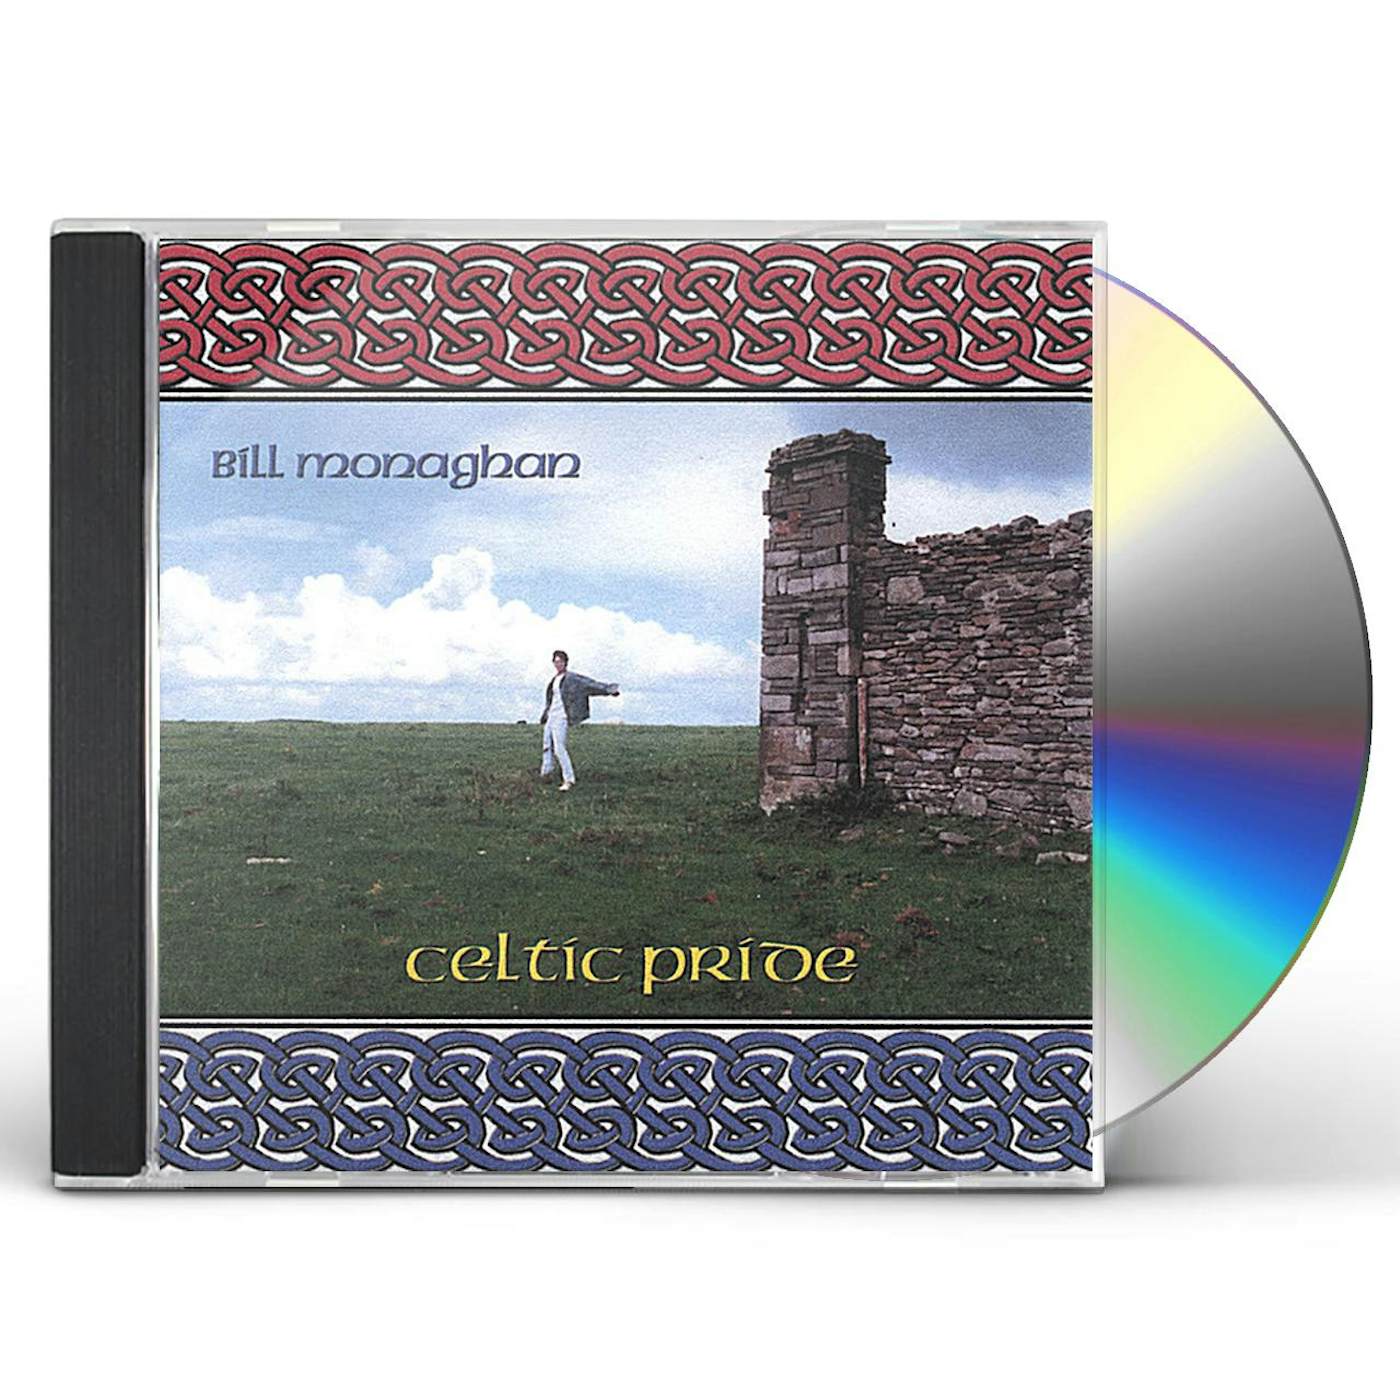 Bill Monaghan CELTIC PRIDE CD